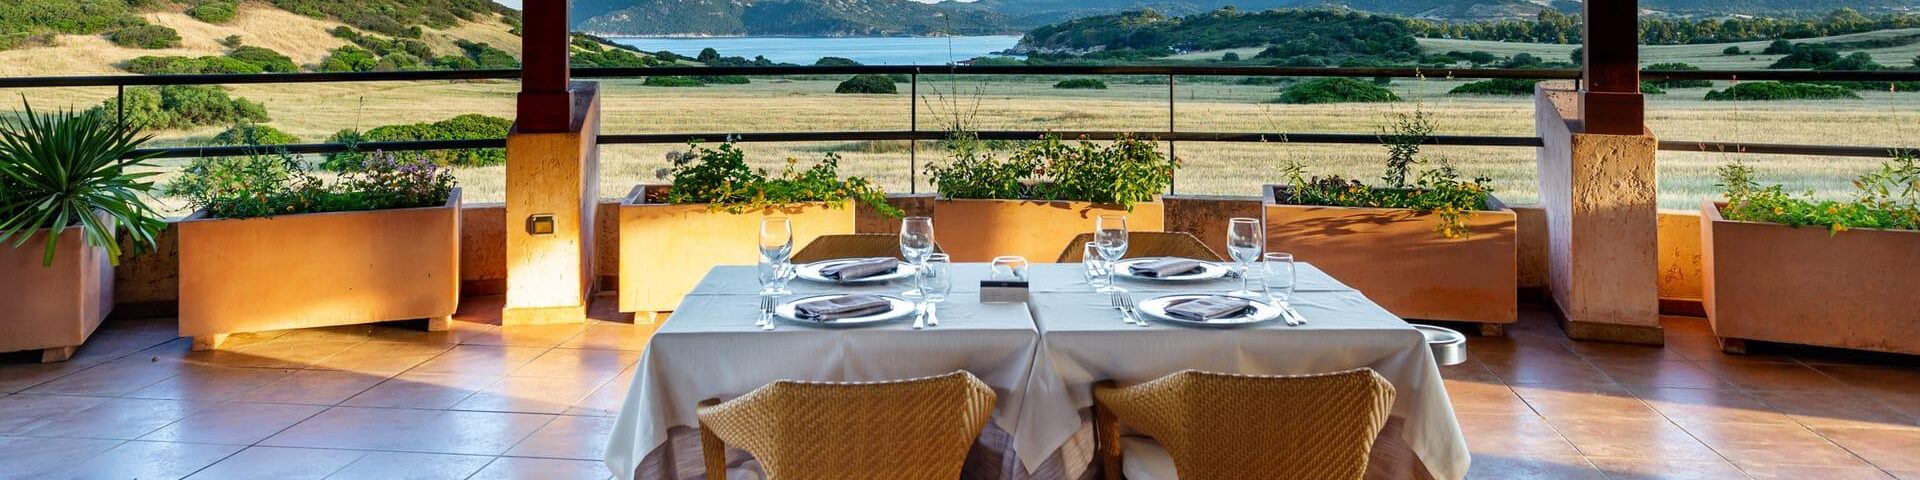 sant_elmo_beach_hotel_restaurant_ristorante_belvedere_sardegna